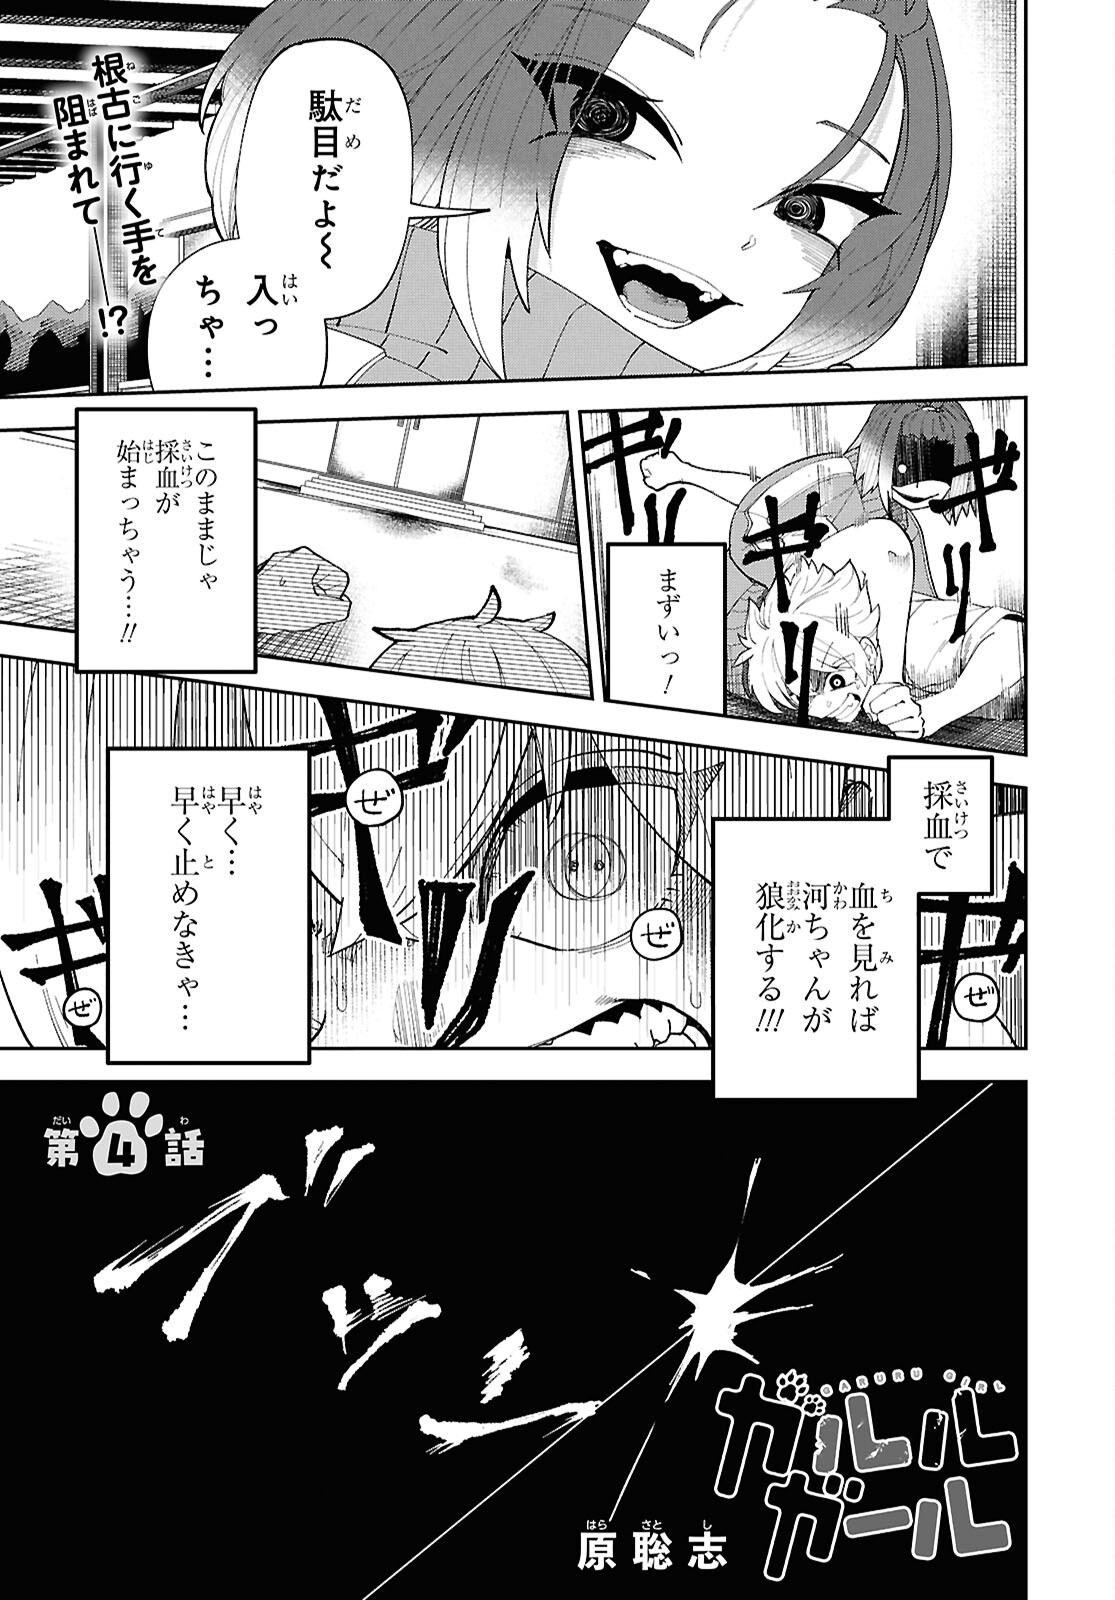 Garuru Girl - Chapter 4 - Page 1